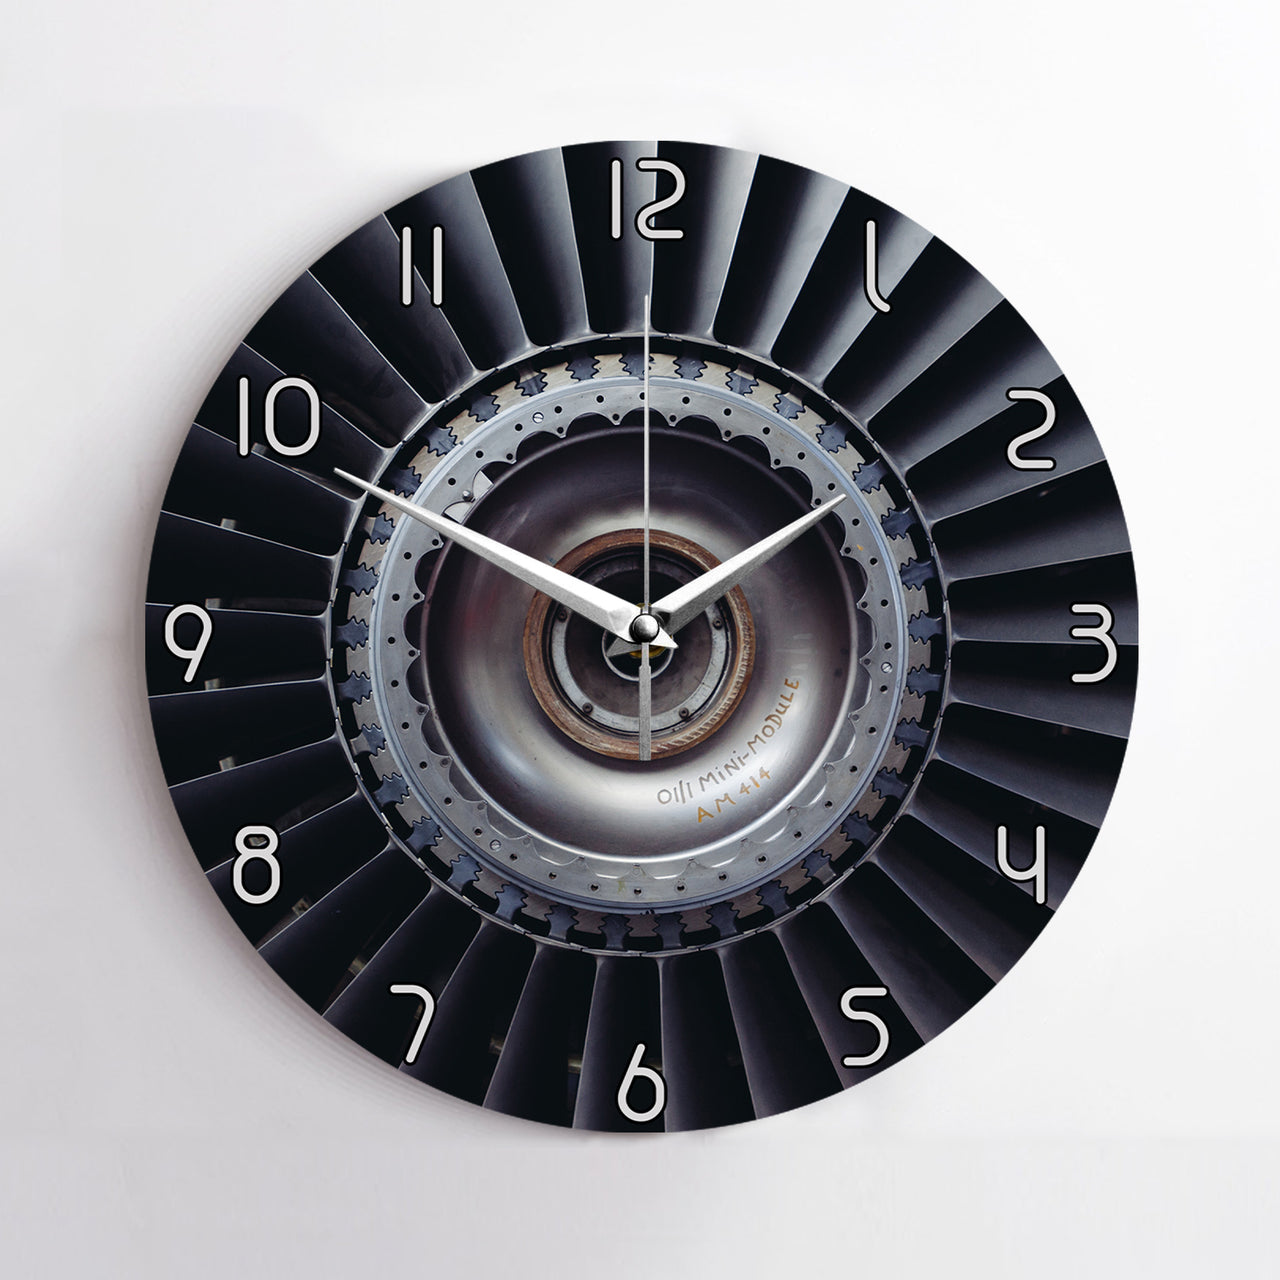 Real Jet Engine Printed Wall Clocks